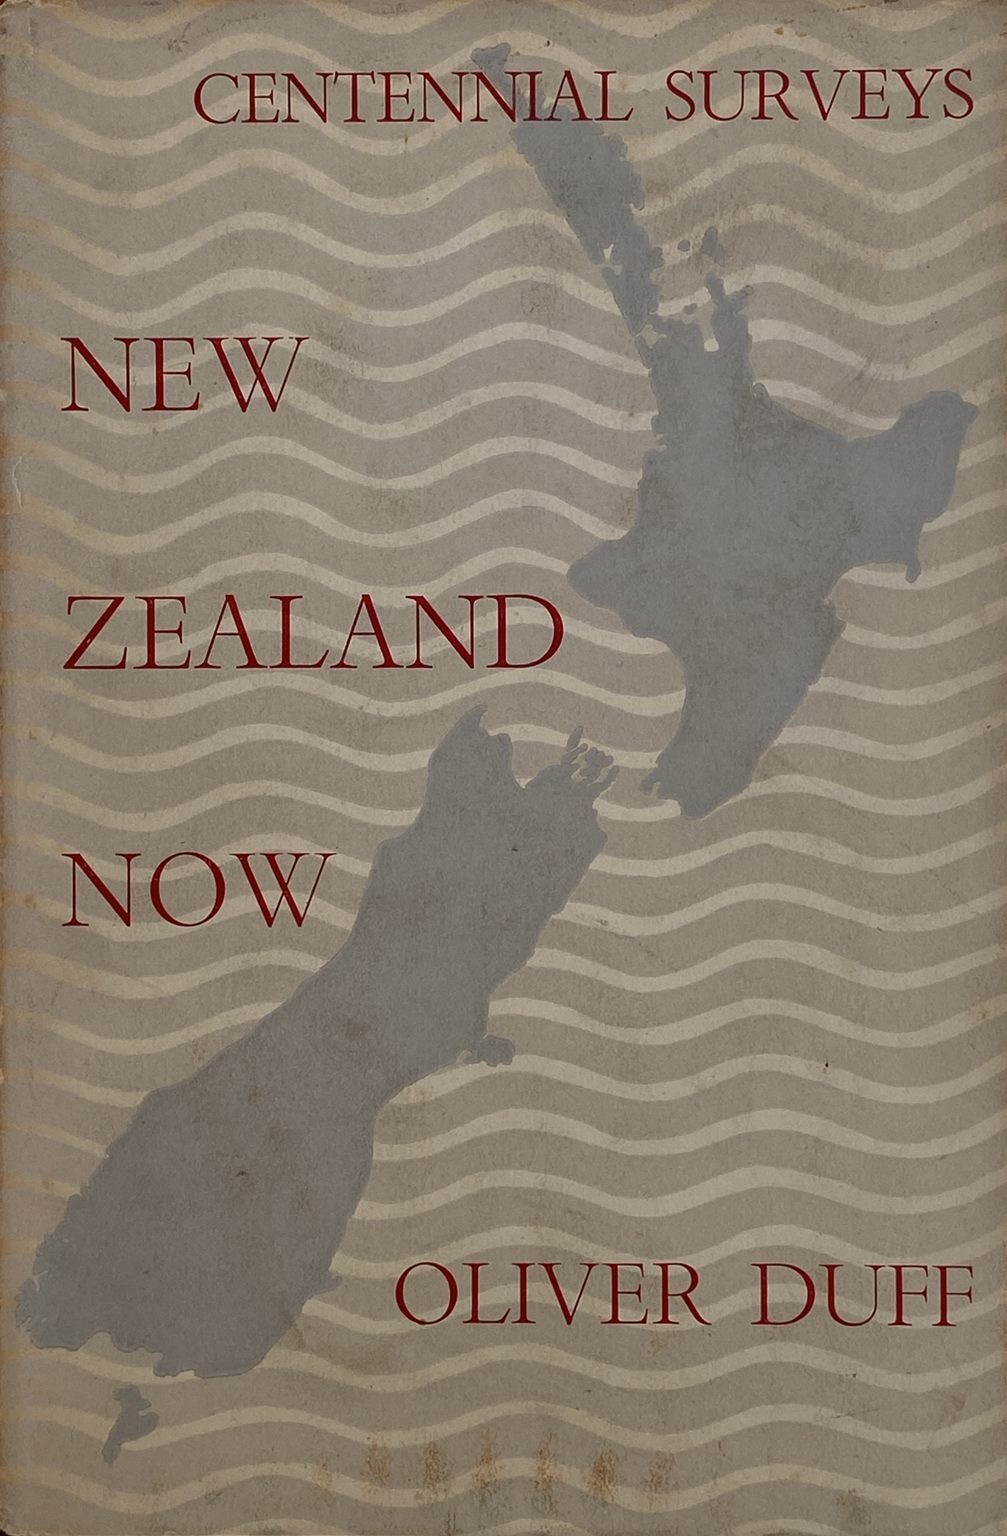 NEW ZEALAND NOW: New Zealand Centennial Surveys No XIII